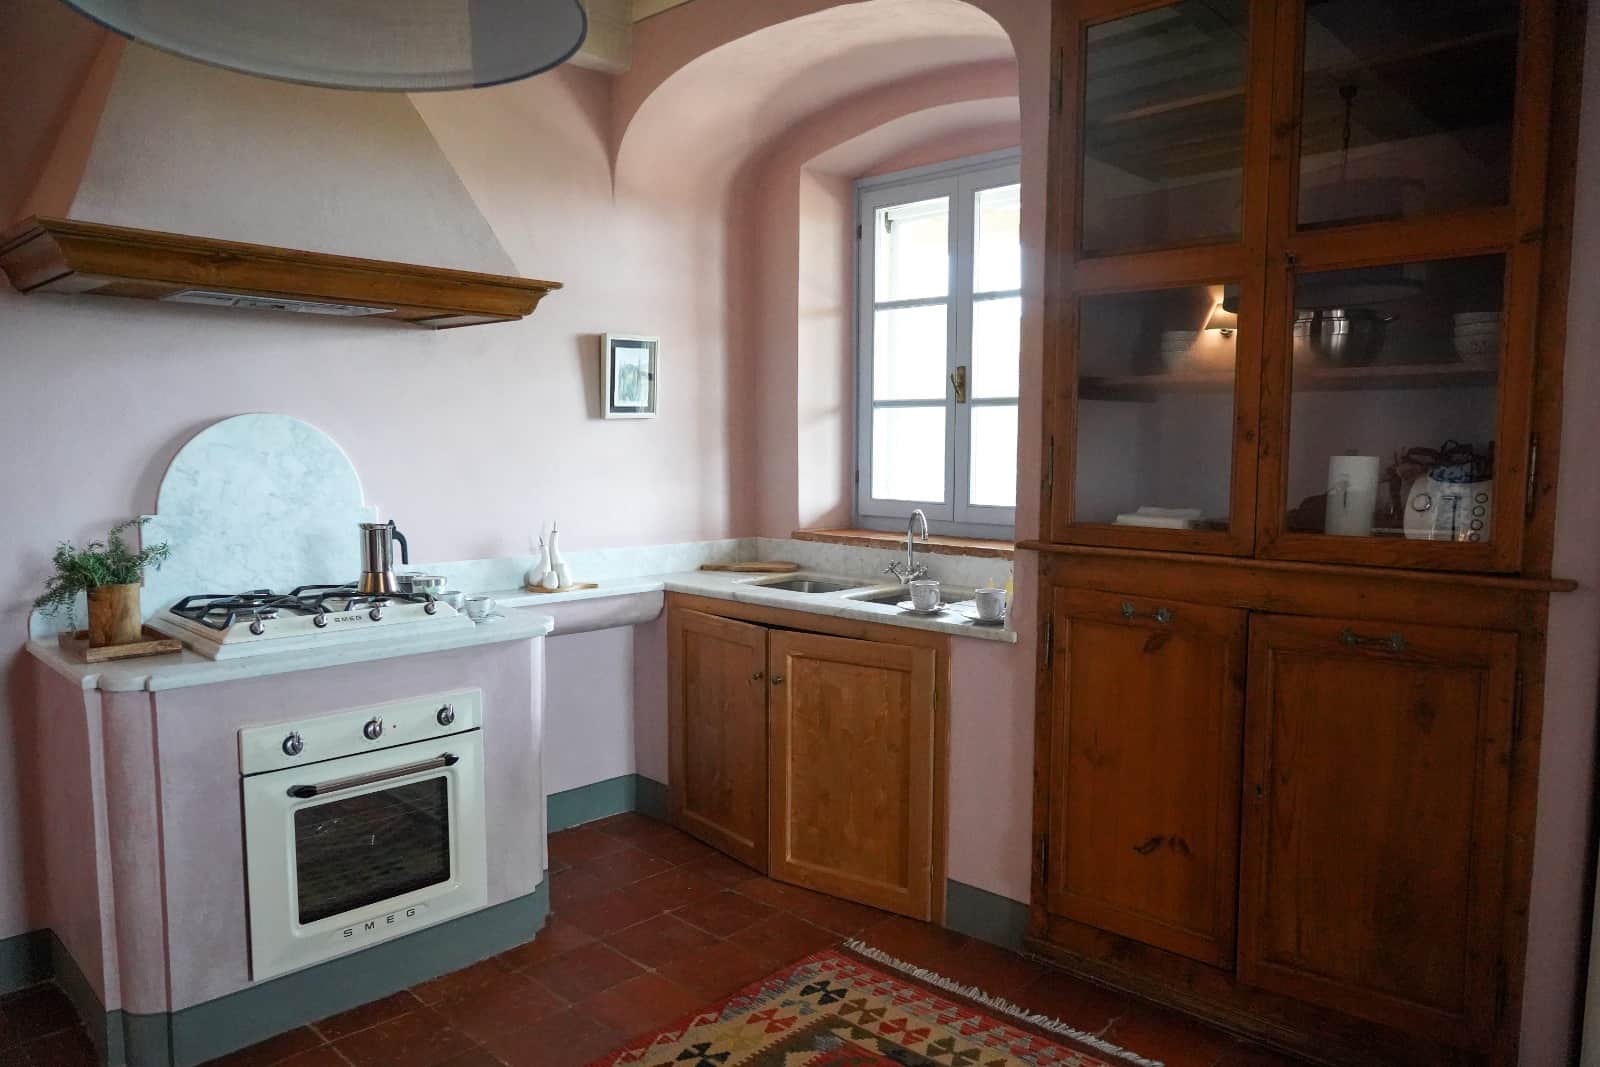 Borgo Suite Kitchen